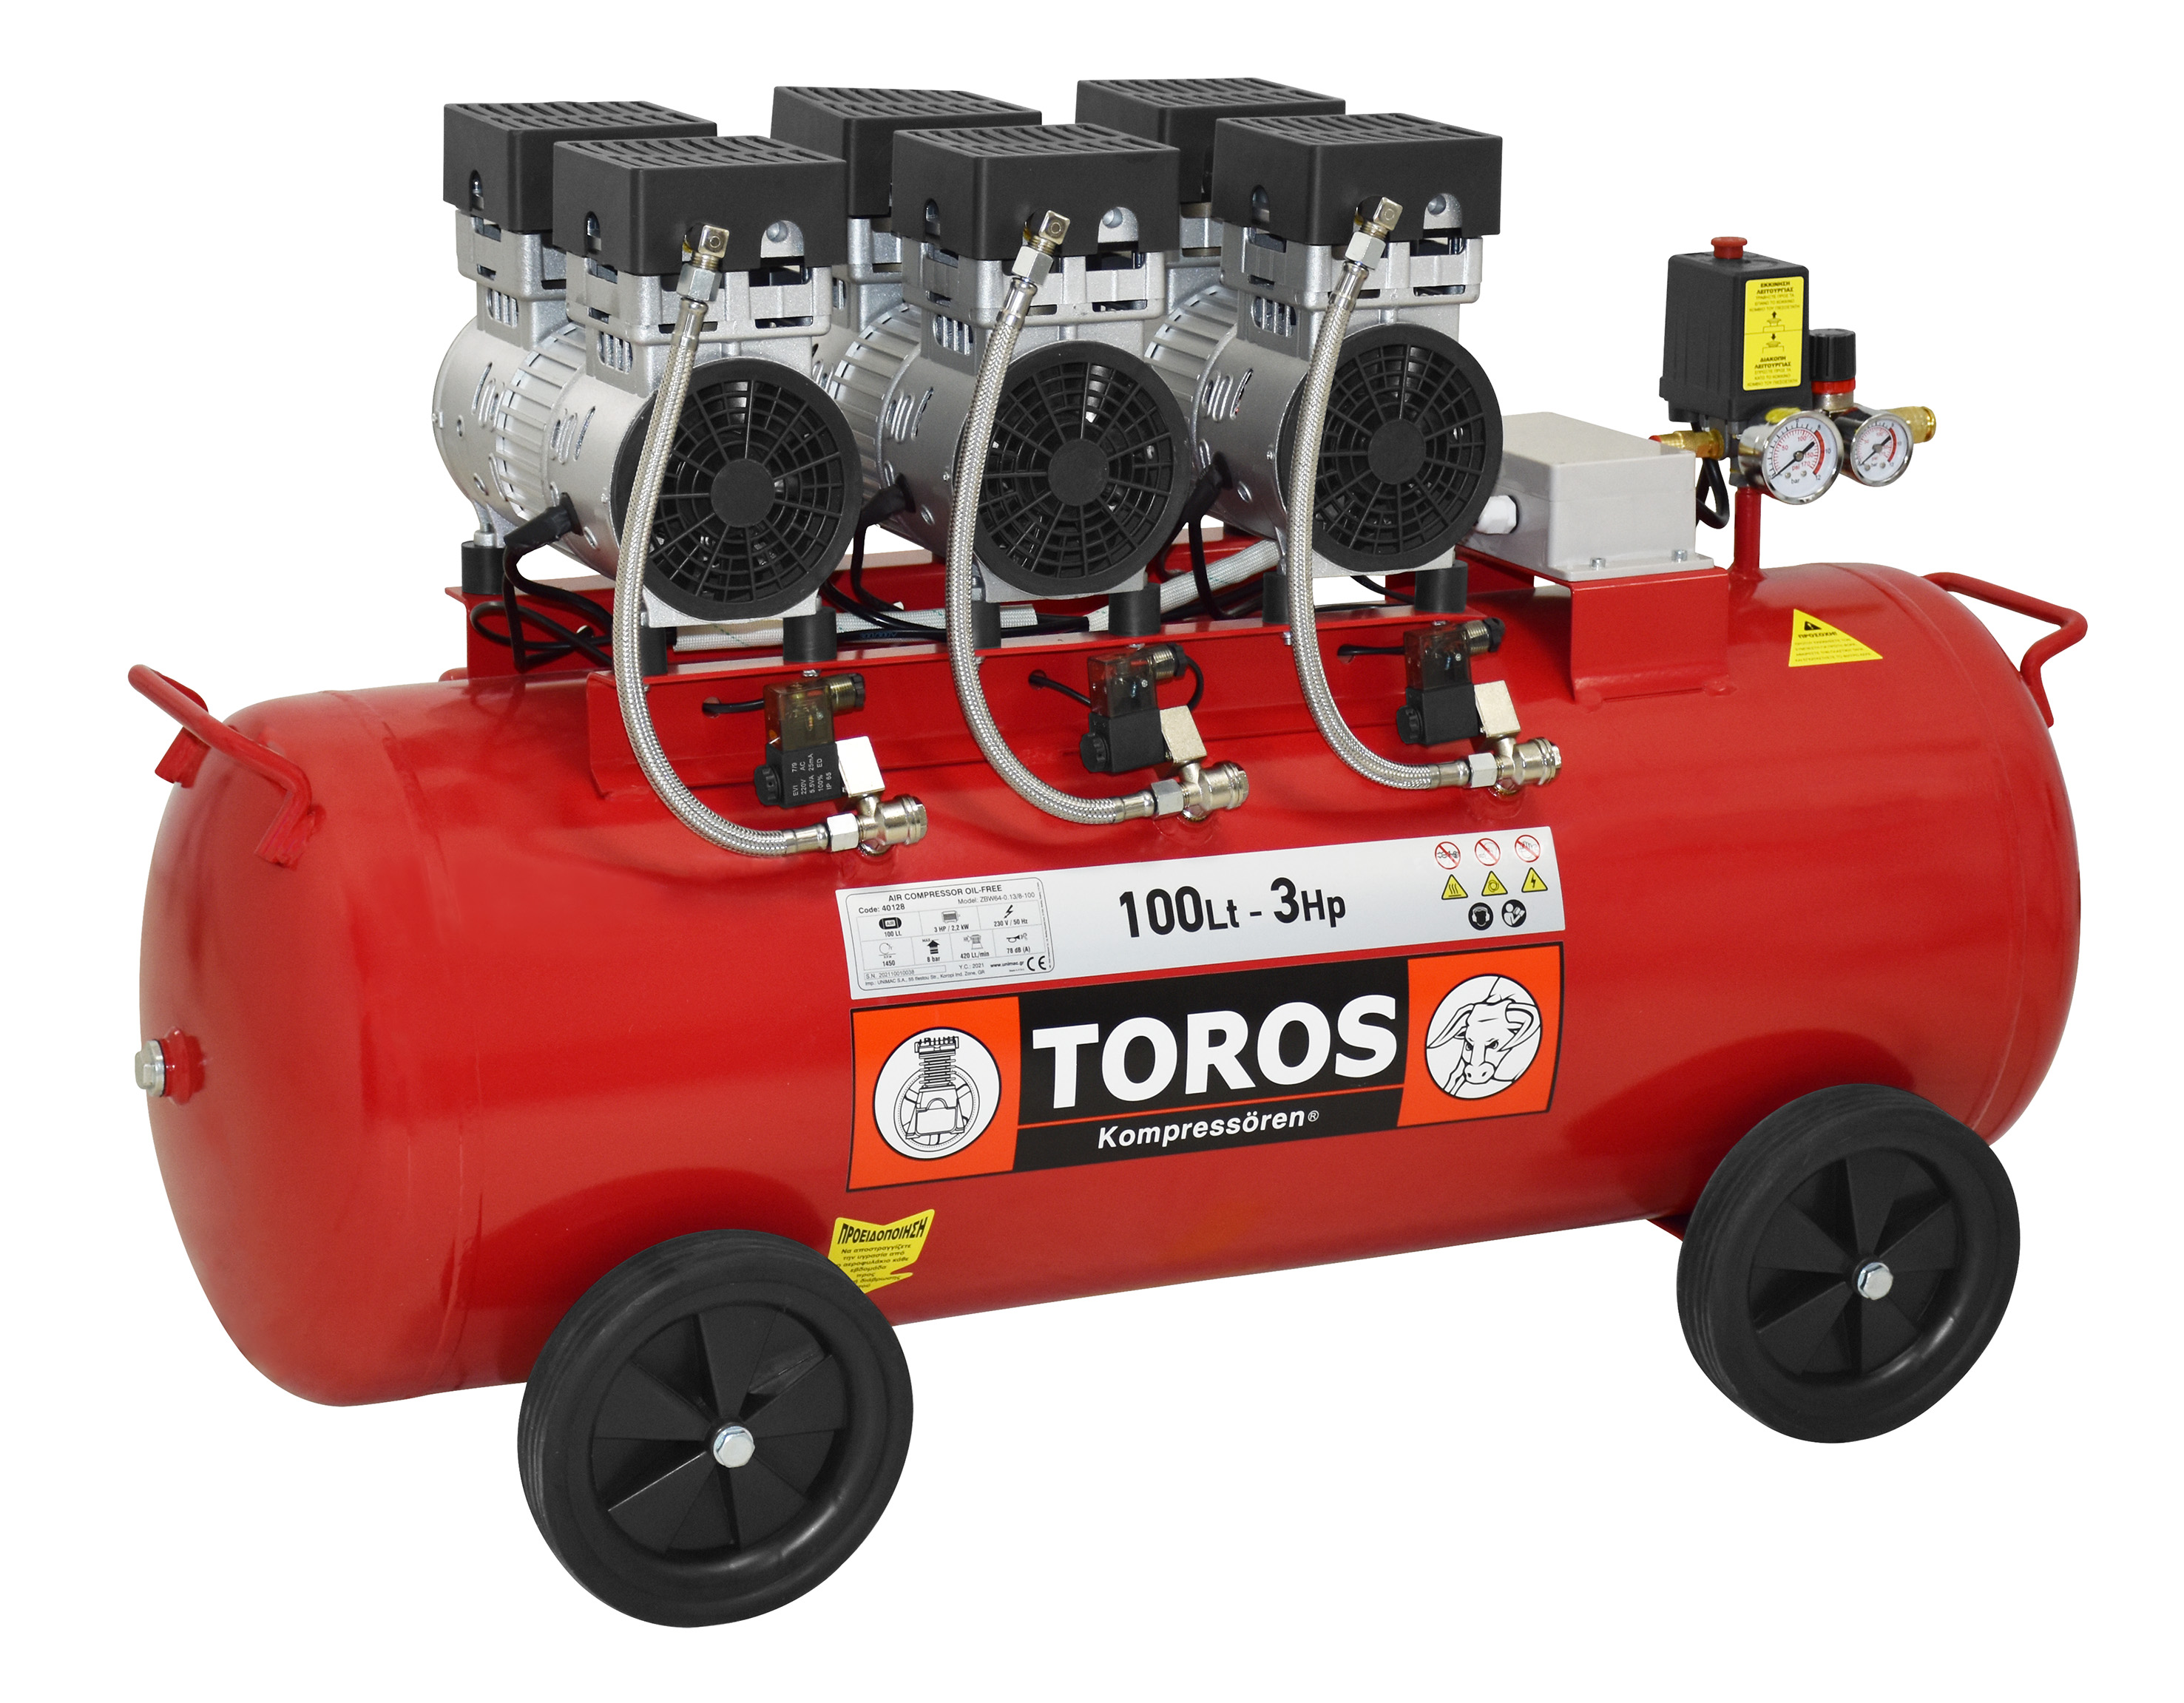 Aircompressor 3HP/100Lt OilFree Toros - 2